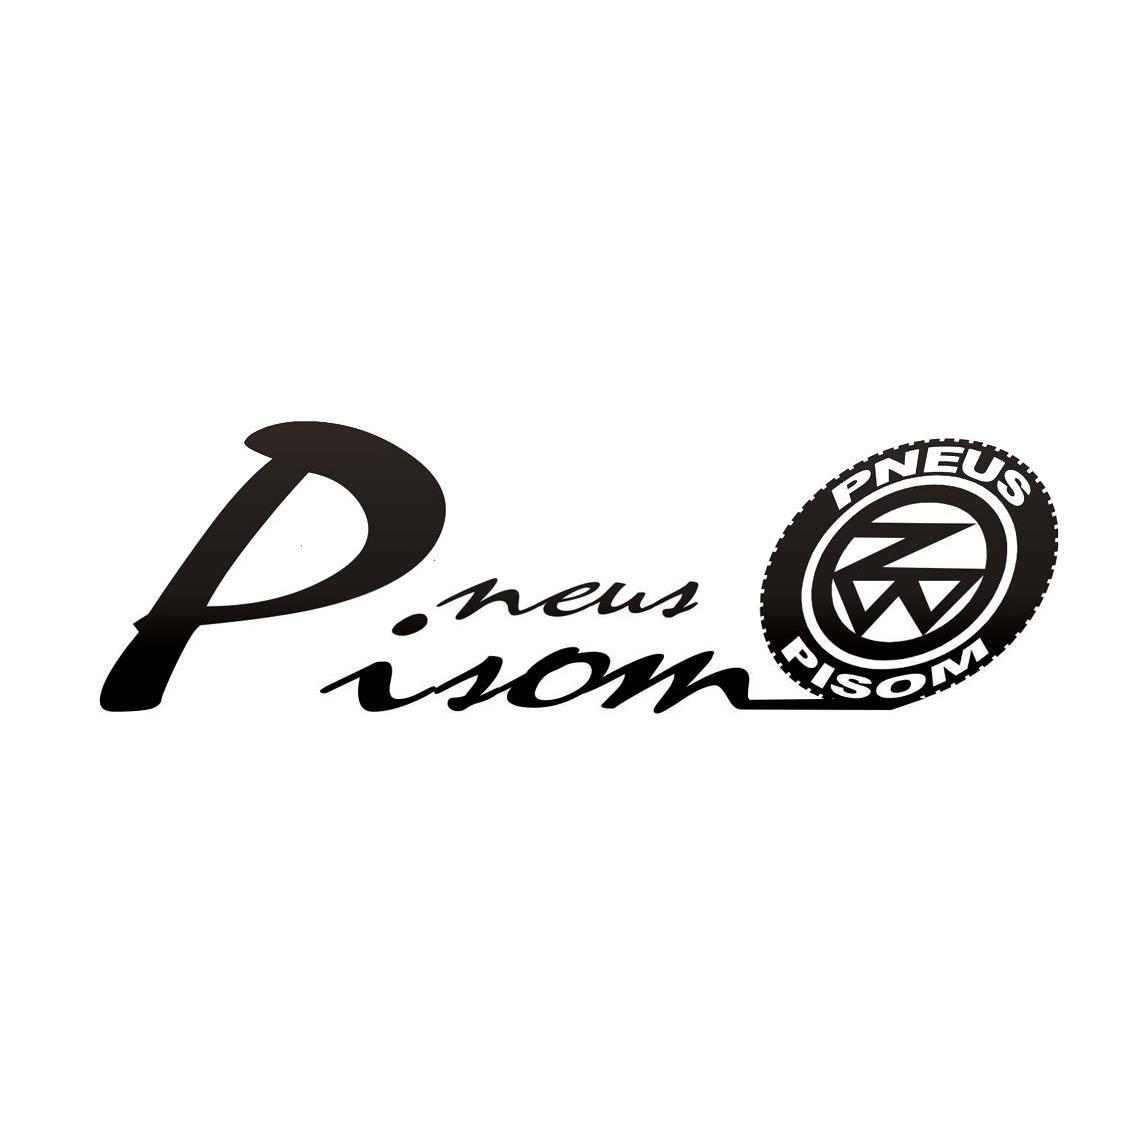 Pneus Pisom Logo